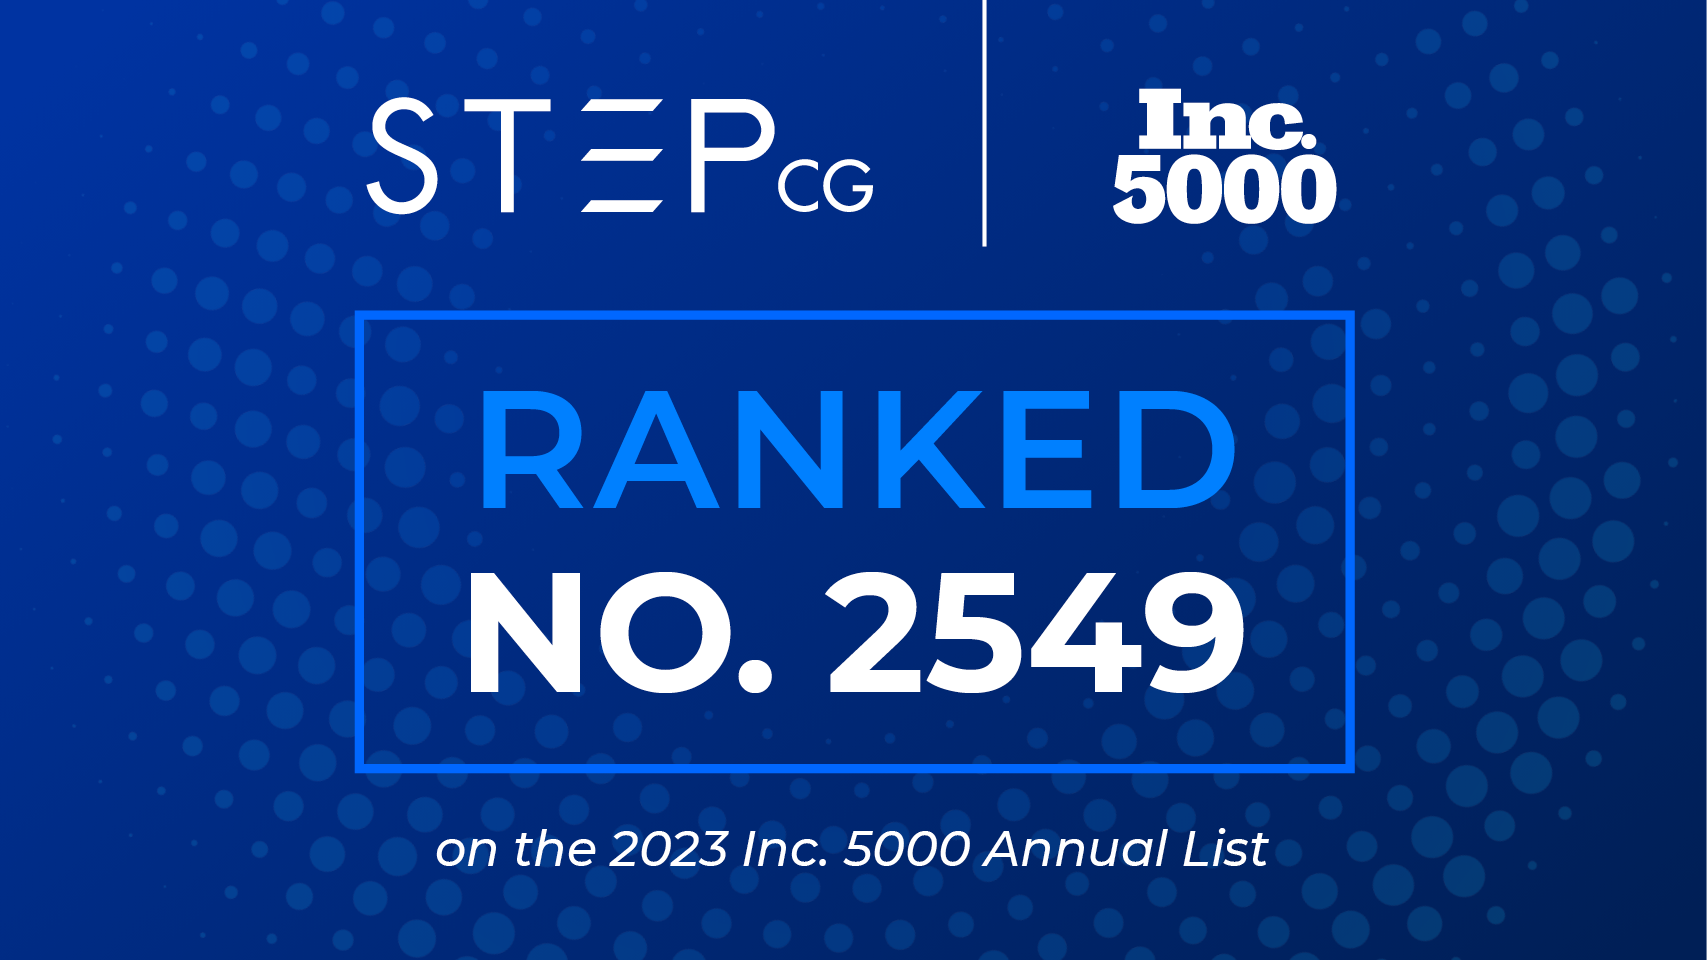 stepcg-inc5000